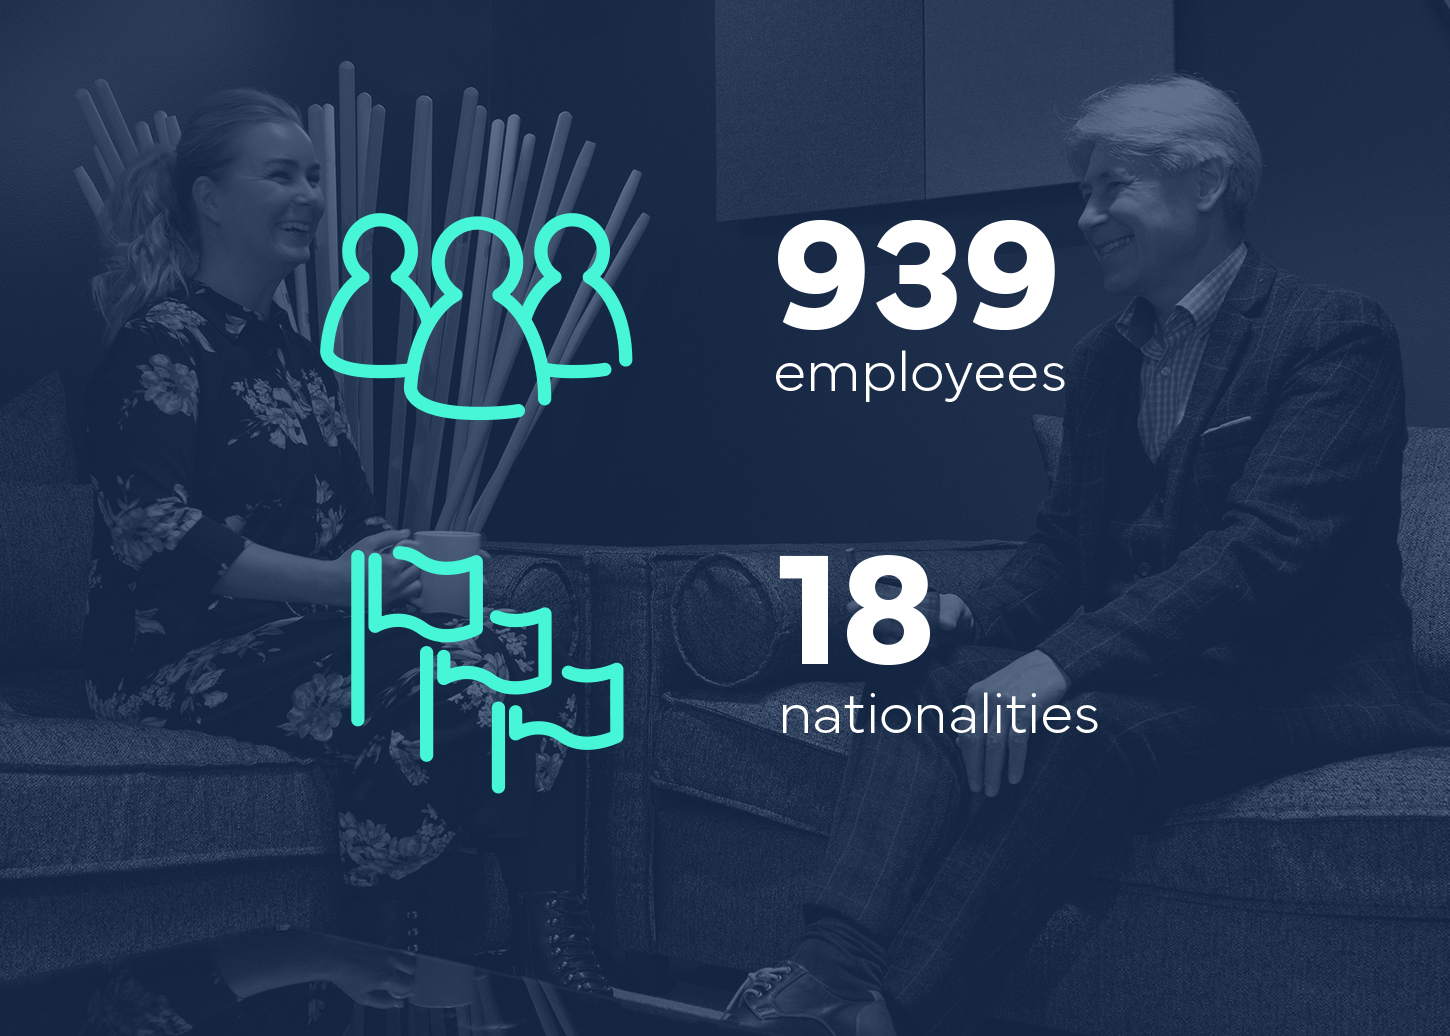 Infographic showing Bassadones employee and nationalities statistics 